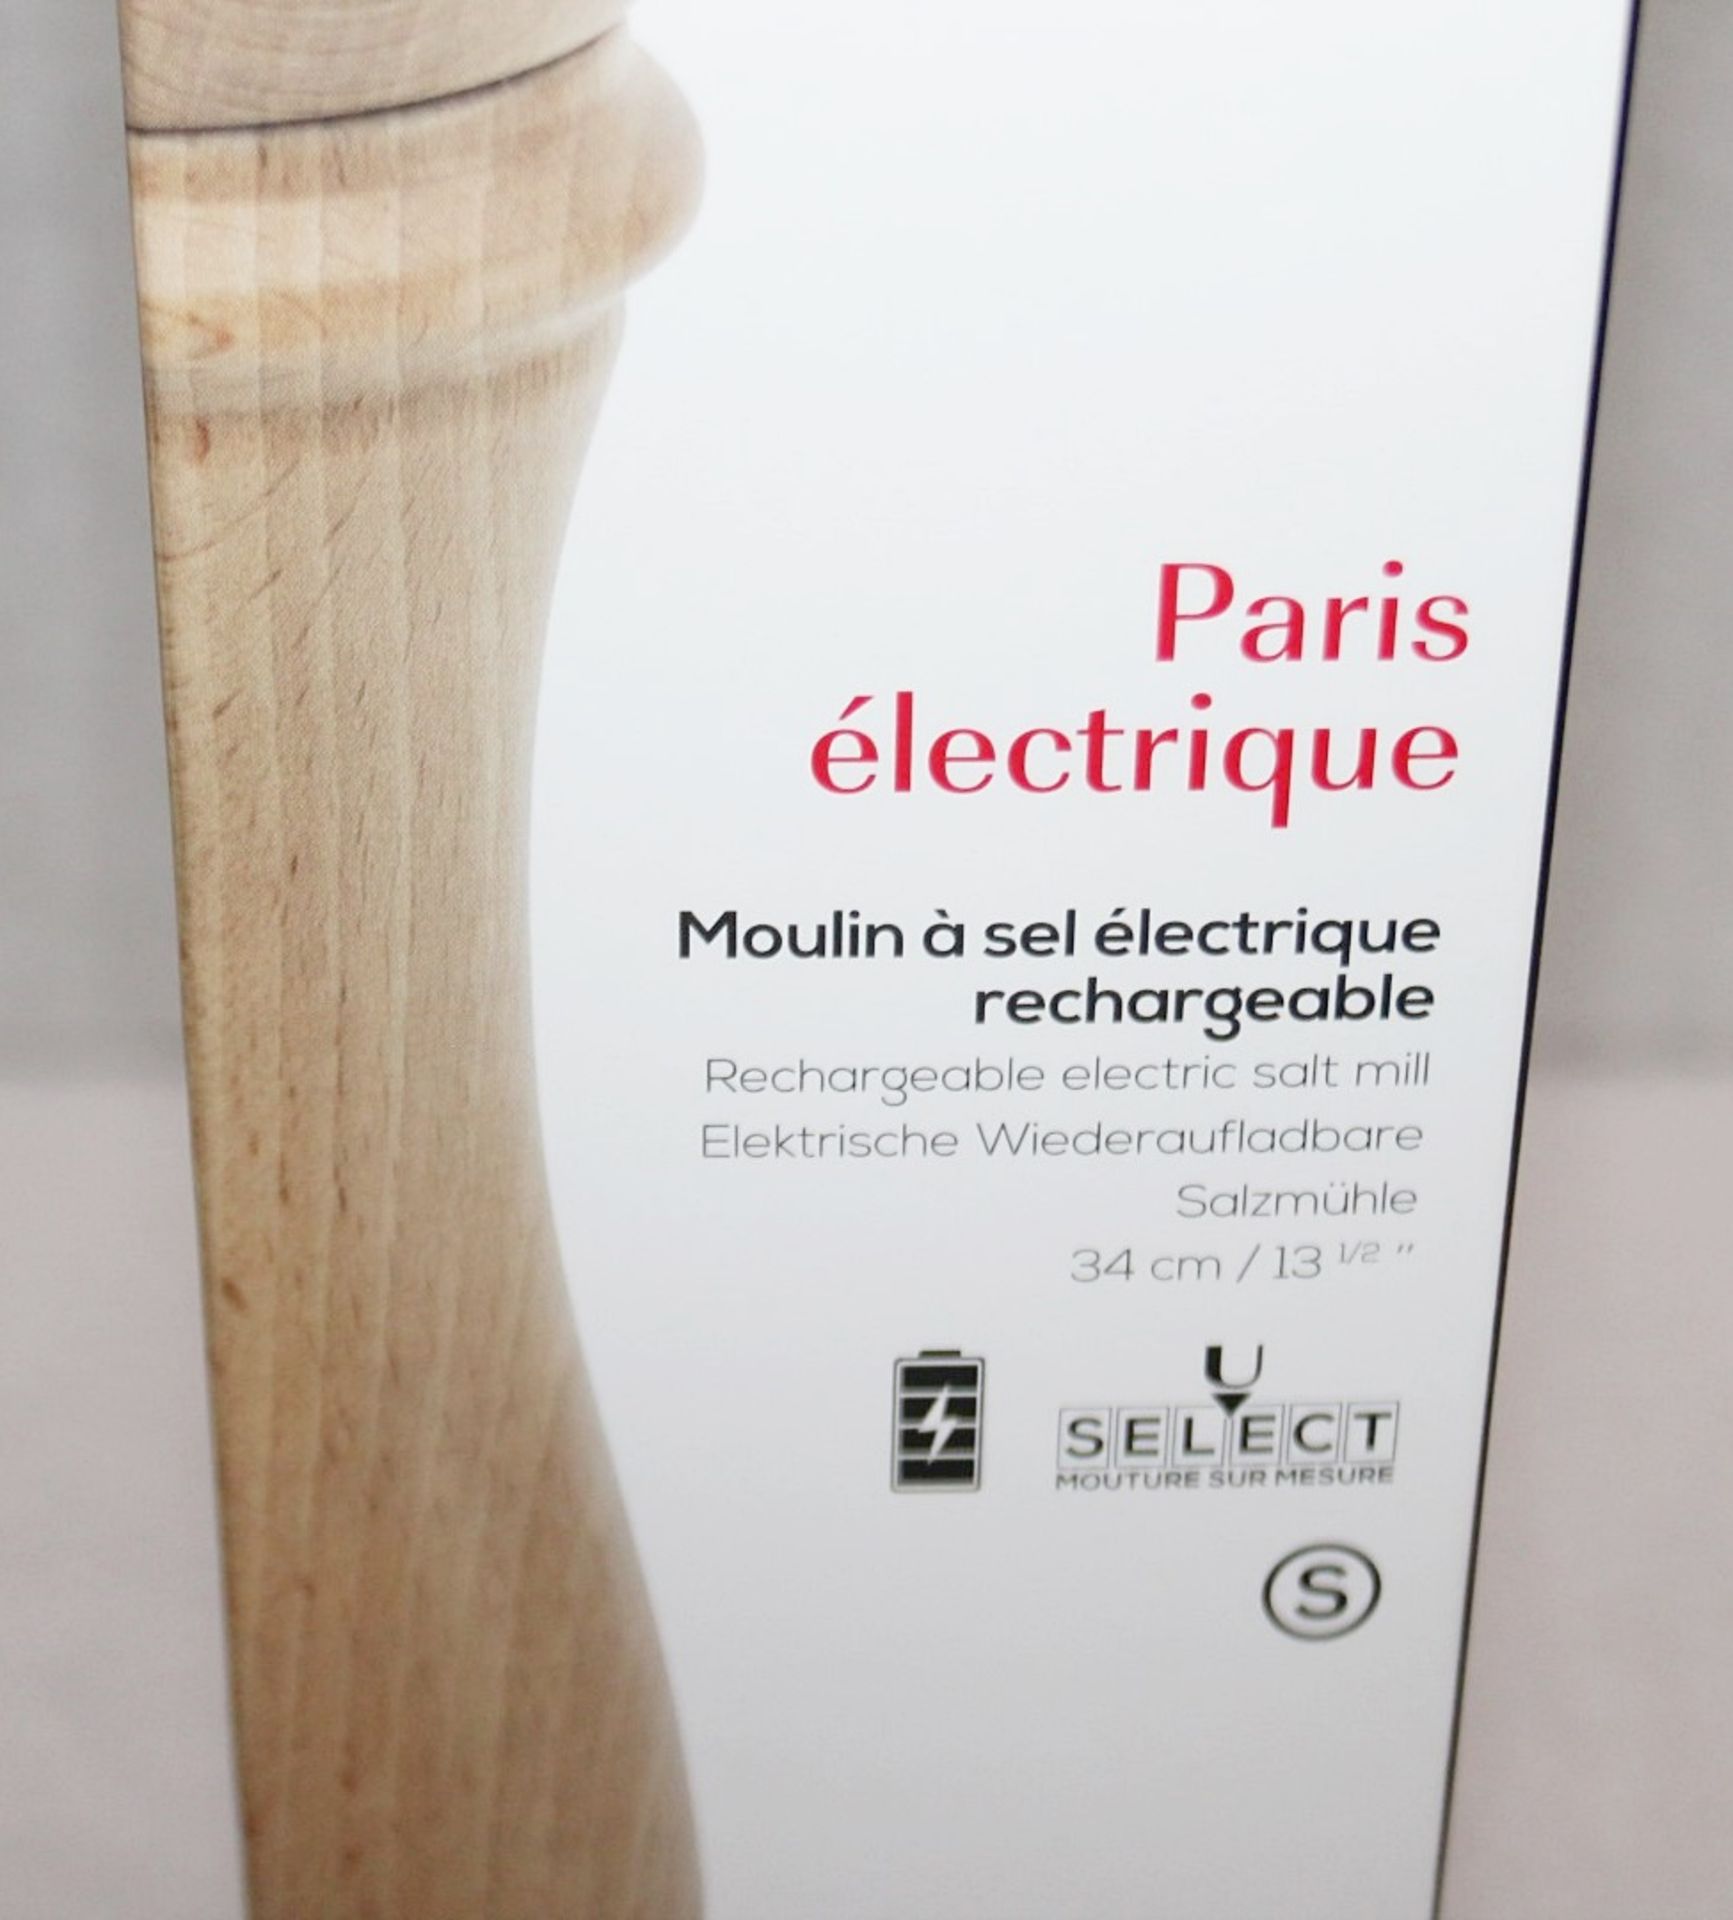 1 x PEUGEOT Paris Electrique U'Select Salt Mill (34cm) - Original Price £100.00 - Unused Boxed Stock - Image 3 of 12